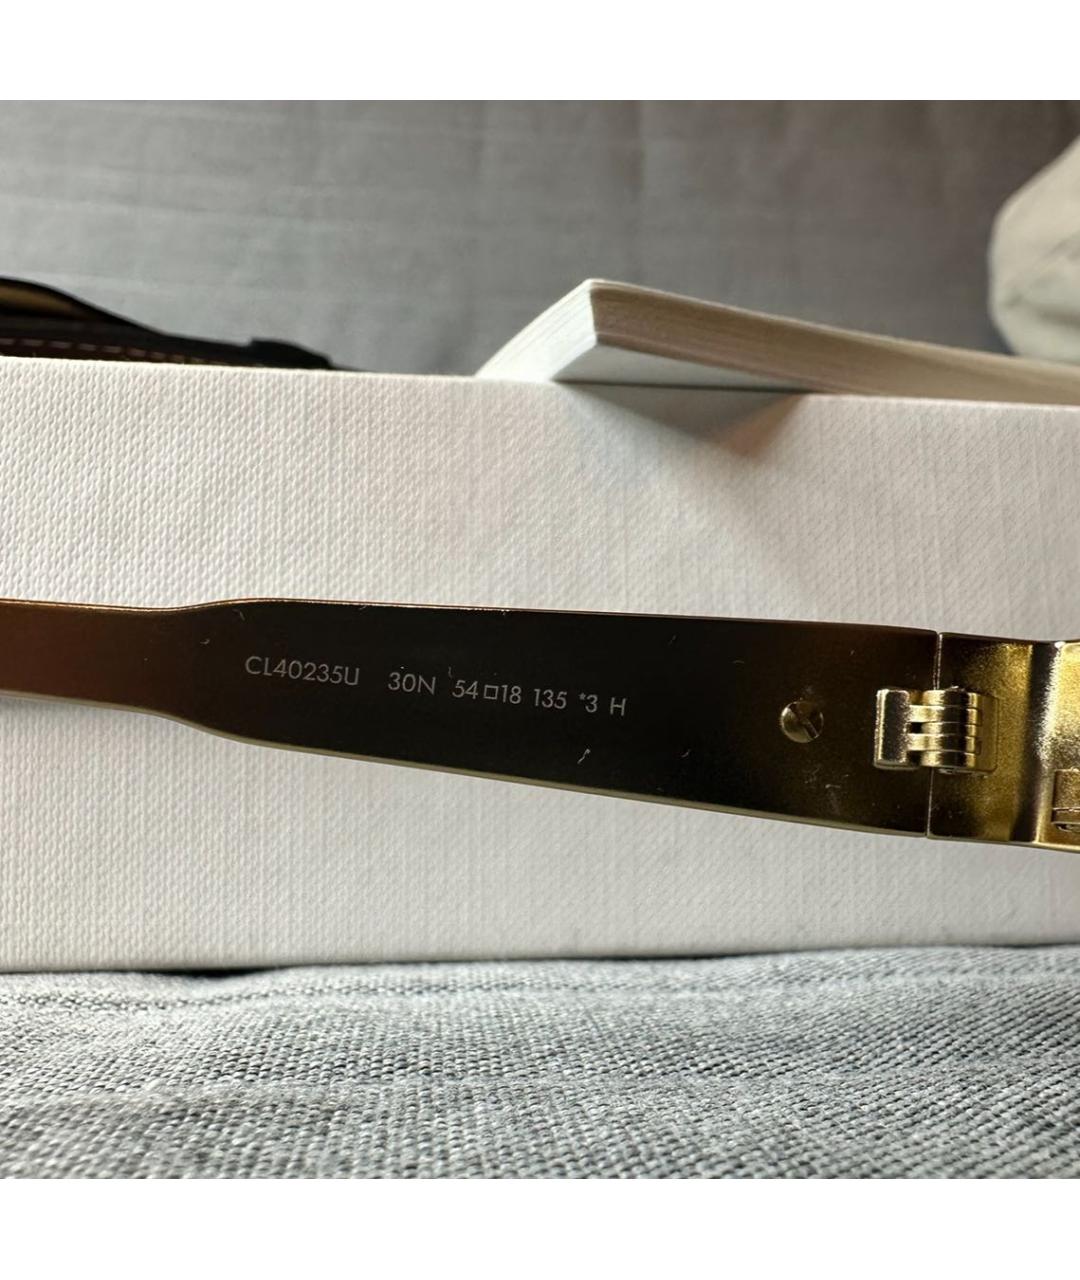 CELINE PRE-OWNED Золотые металлические солнцезащитные очки, фото 7